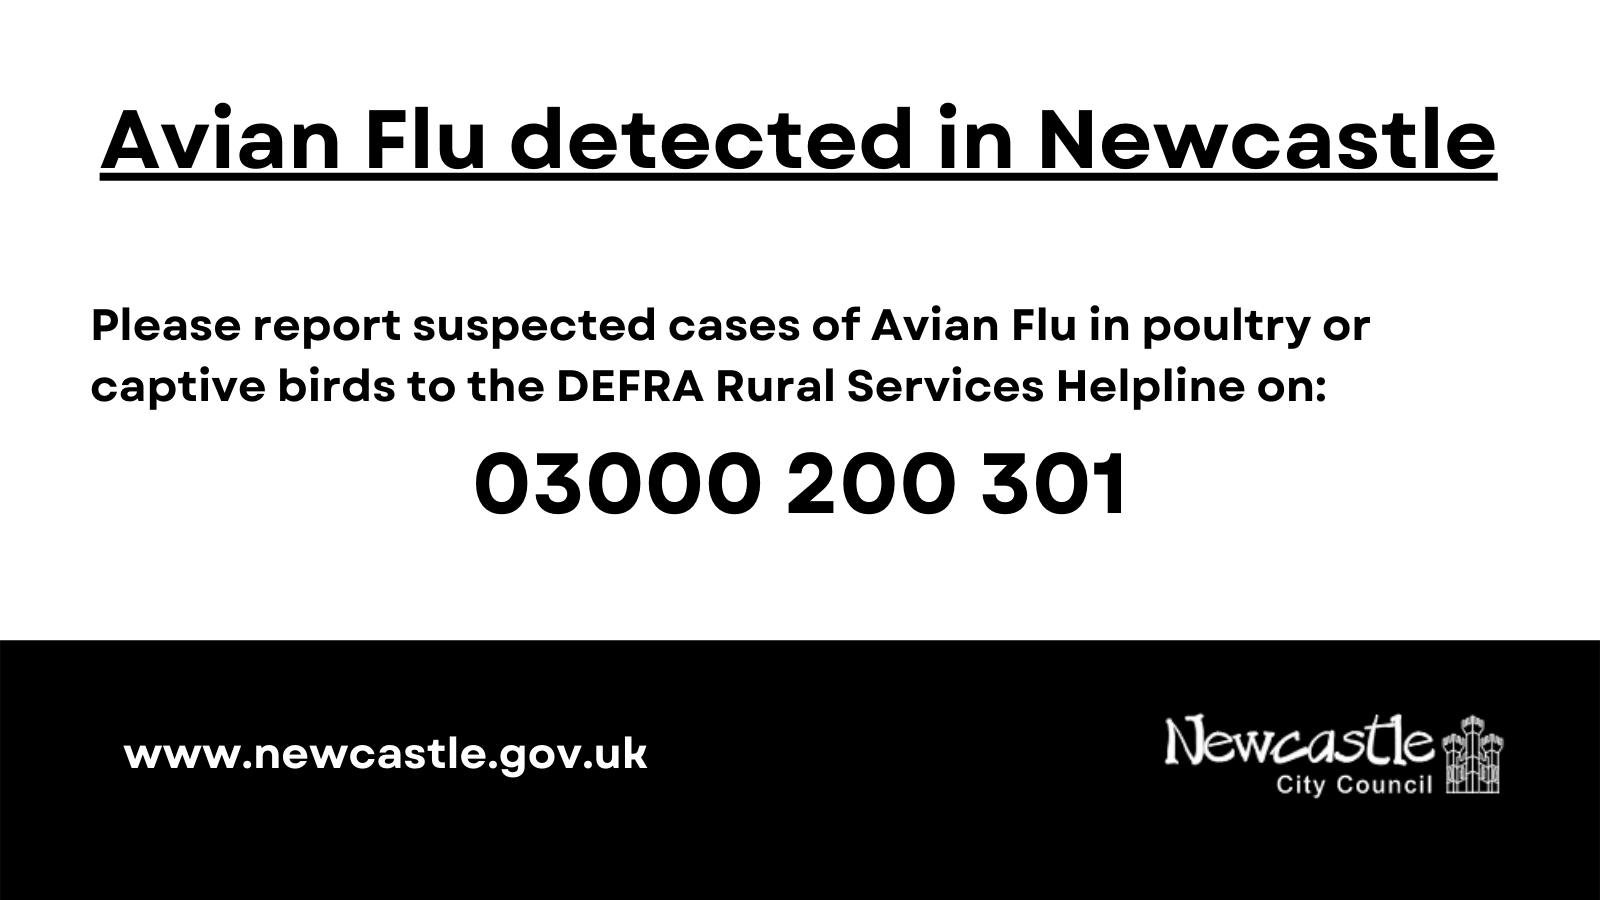 Avian flu identified at Newcastle petting farm Newcastle City Council